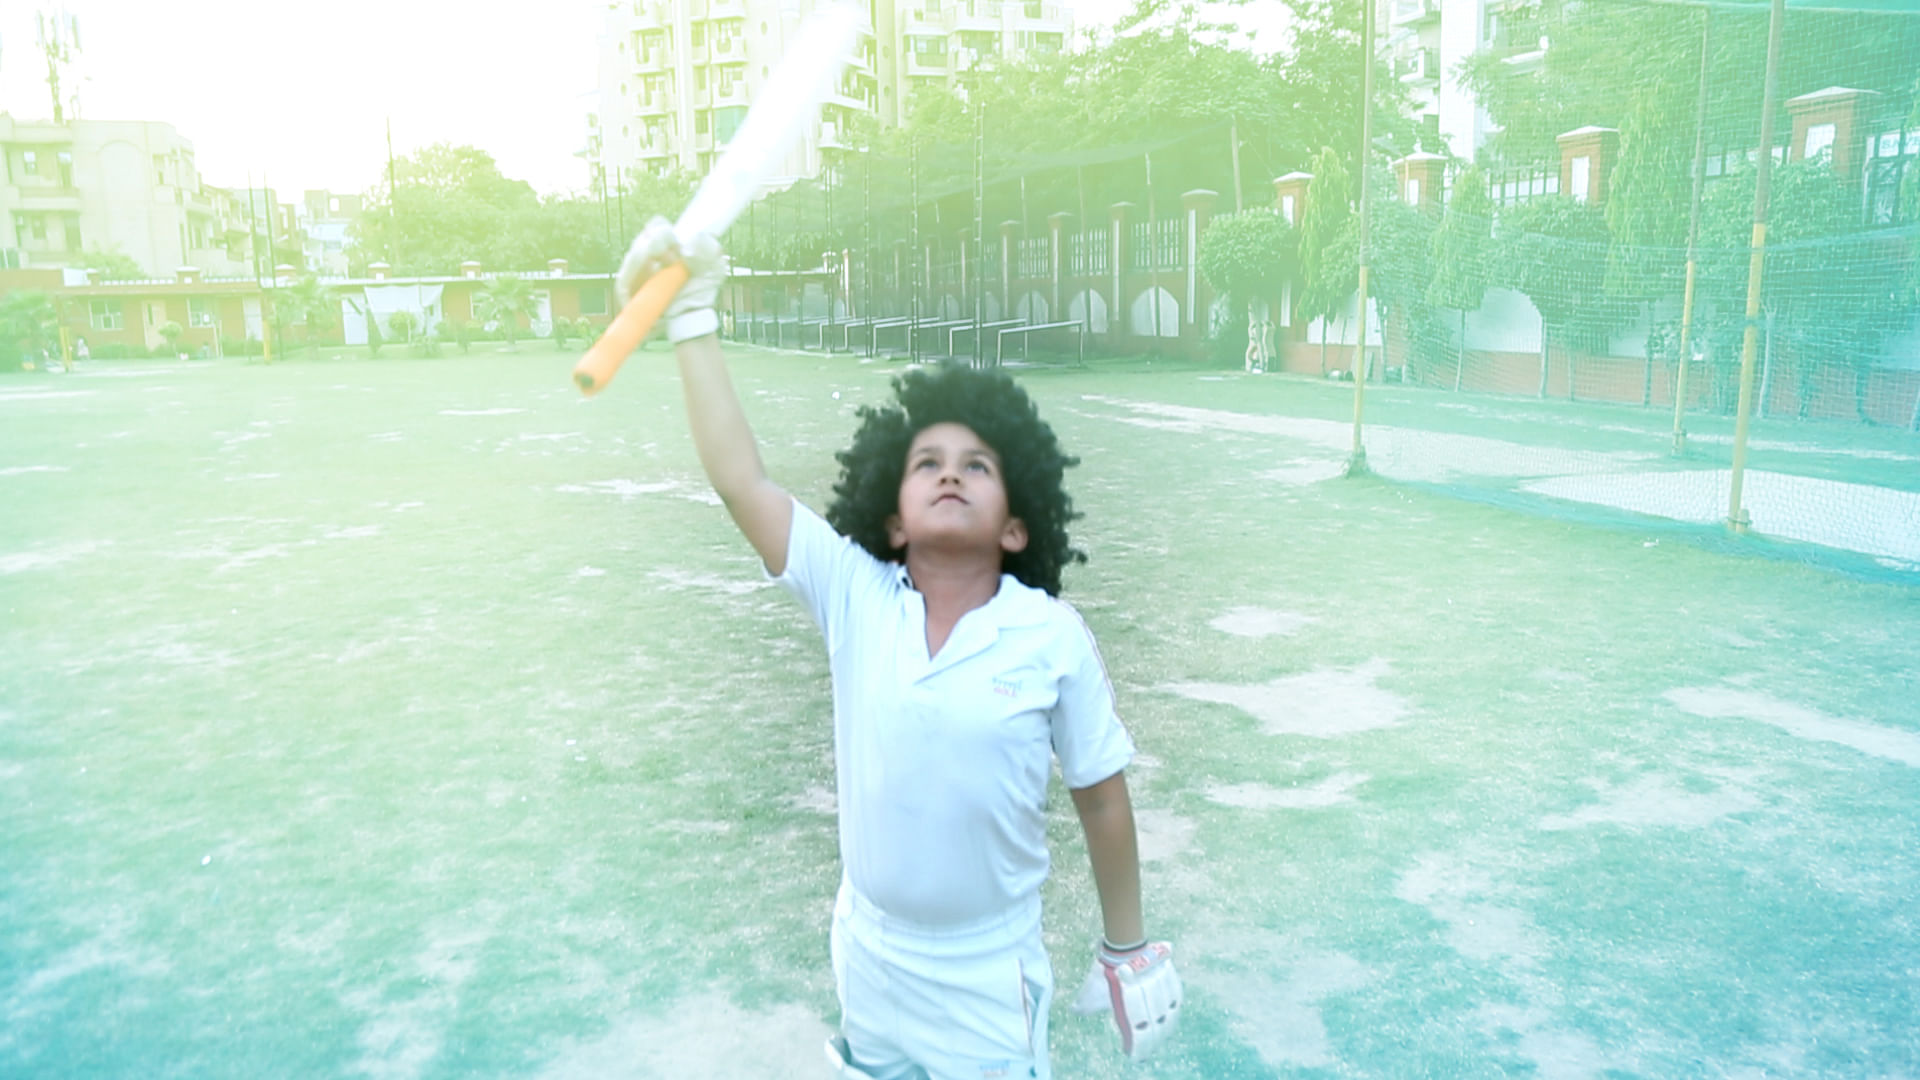 Adorable Video of the Day: Mini Master Blasters raise their bat to Sachin Tendulkar